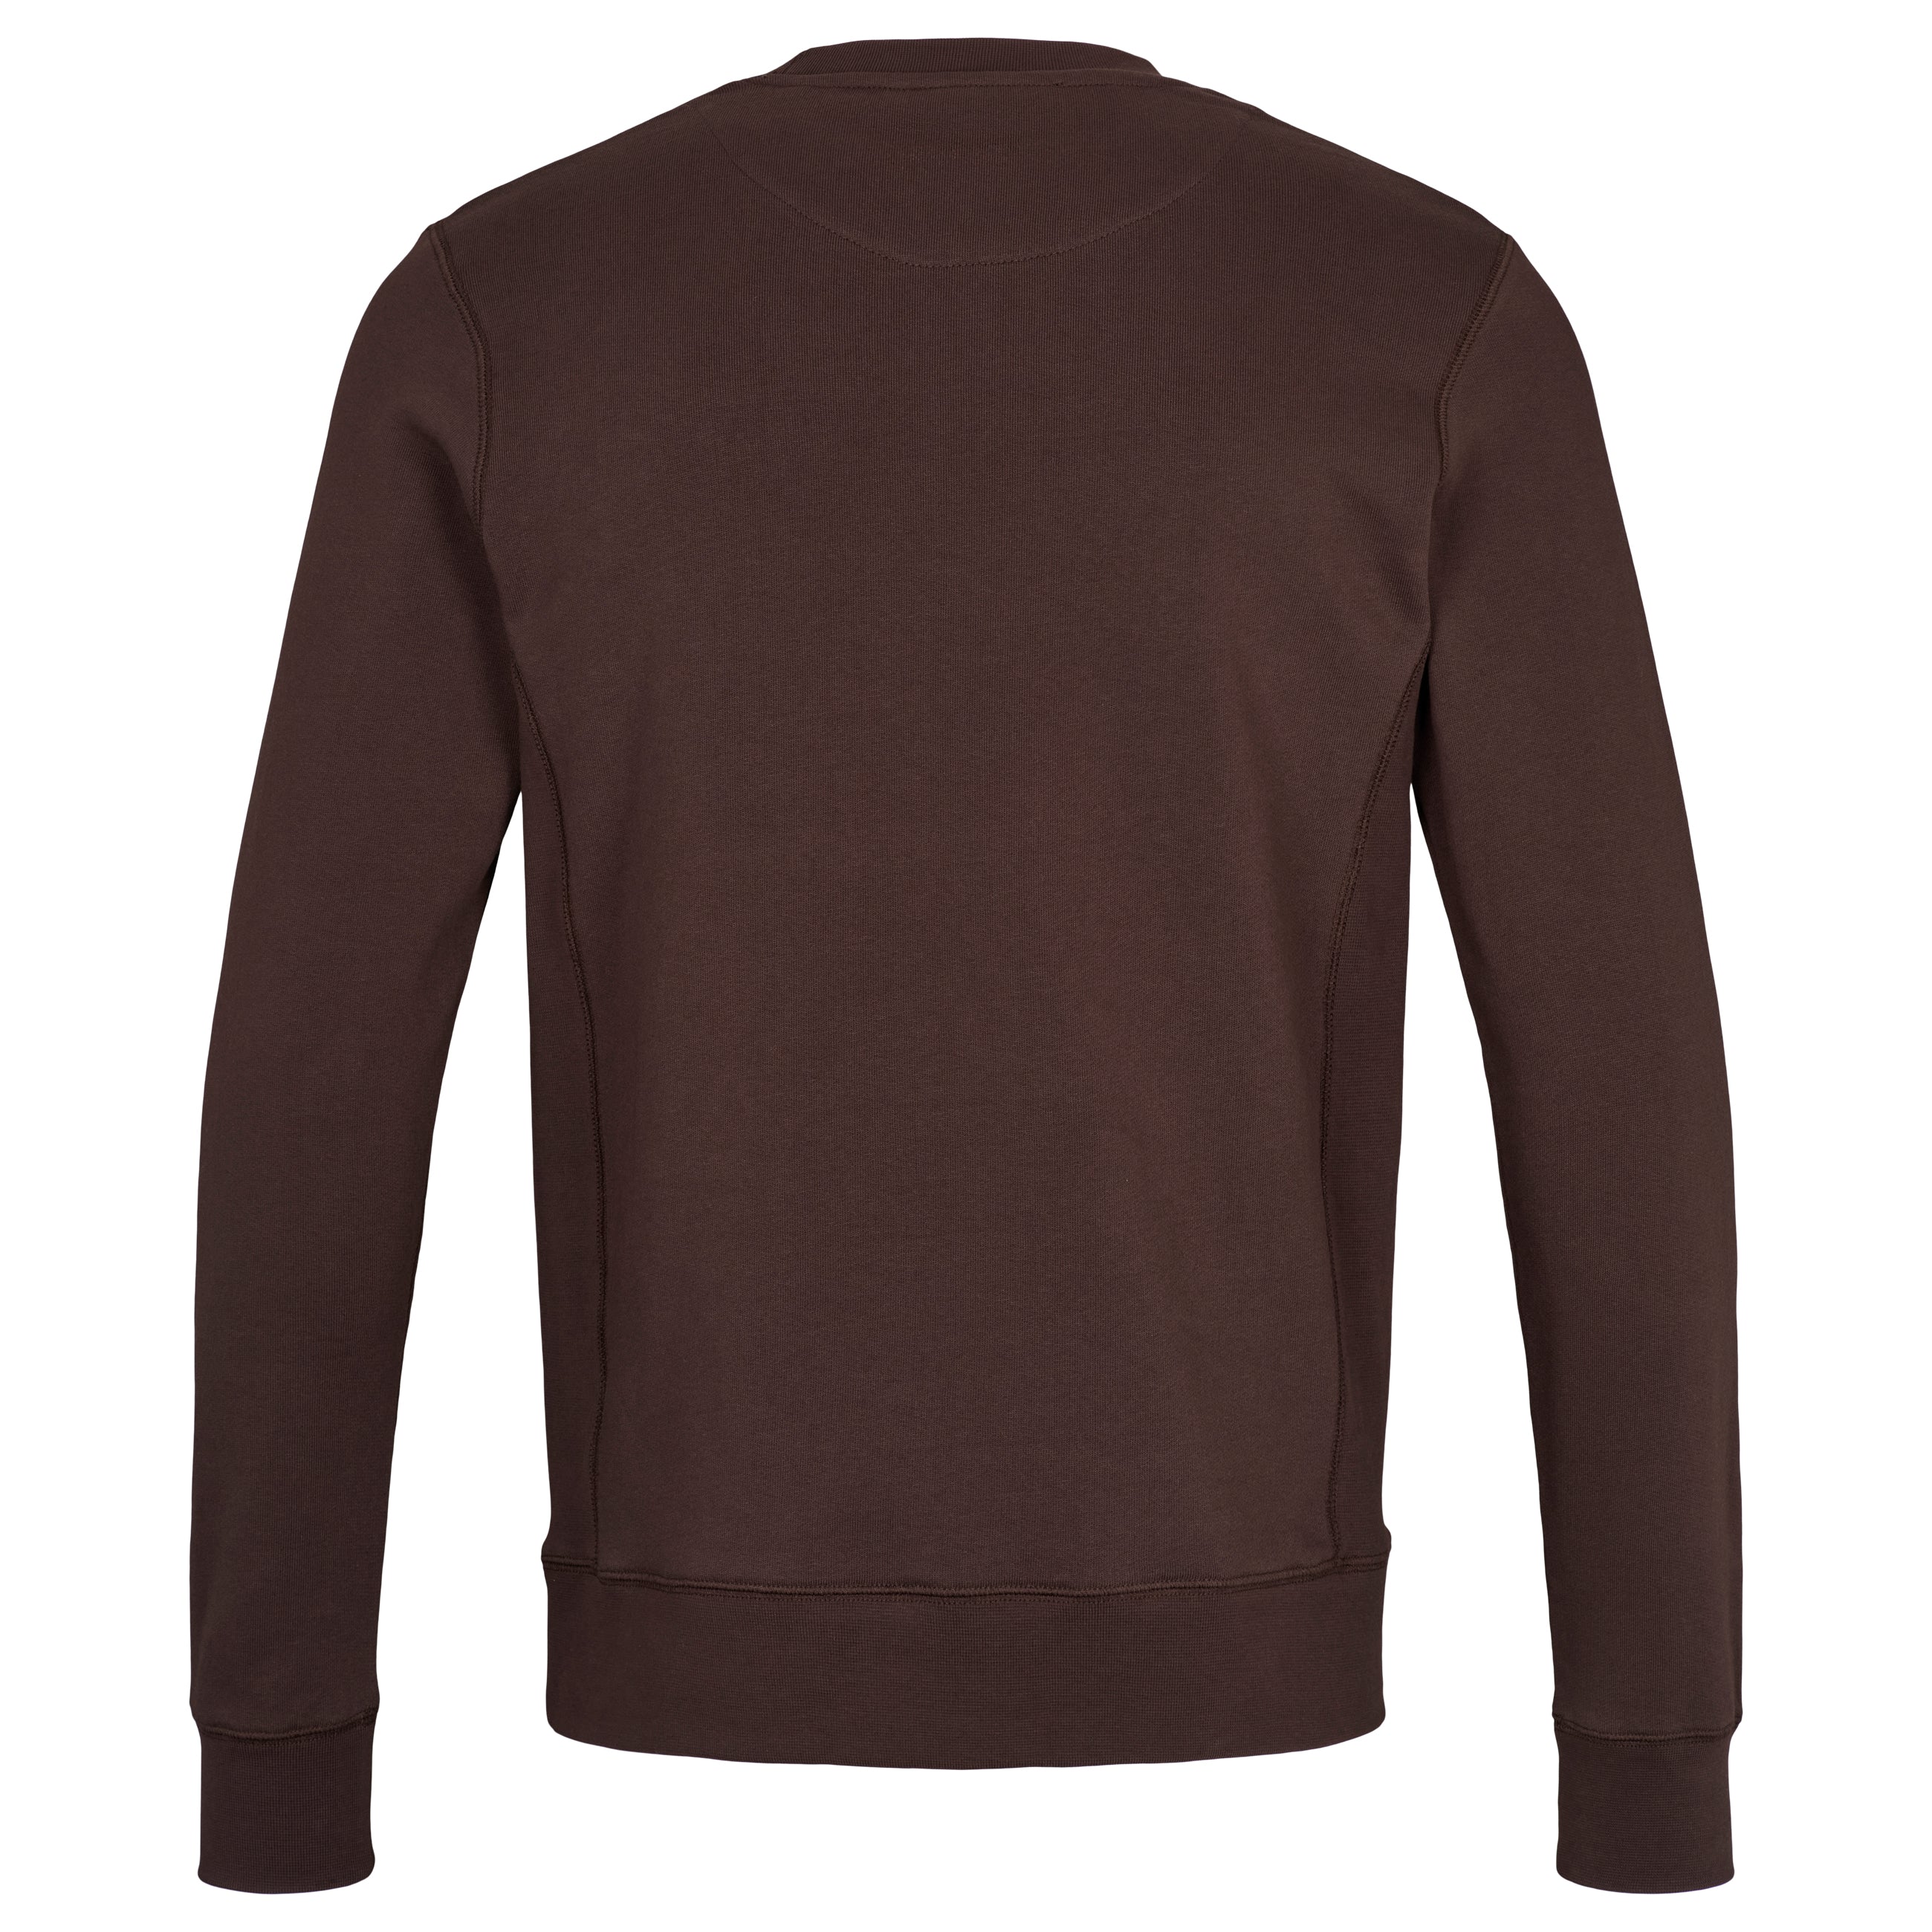 By Garment Makers The Organic Sweatshirt GOTS Sweatshirt 3000 Ebony Brown